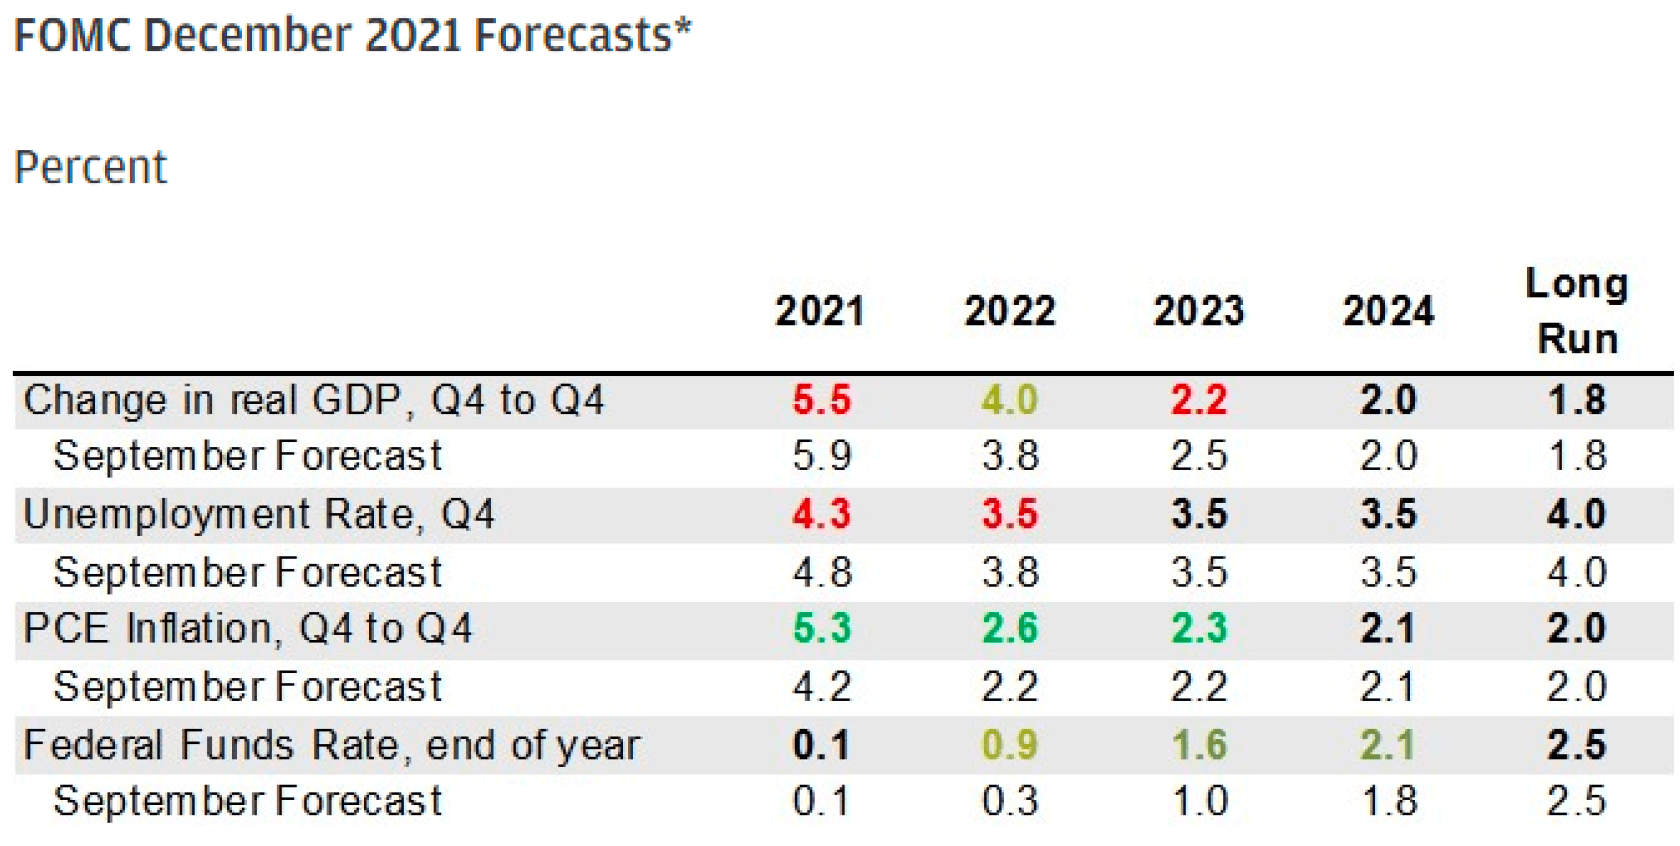 FOMC December 2021 Forecast